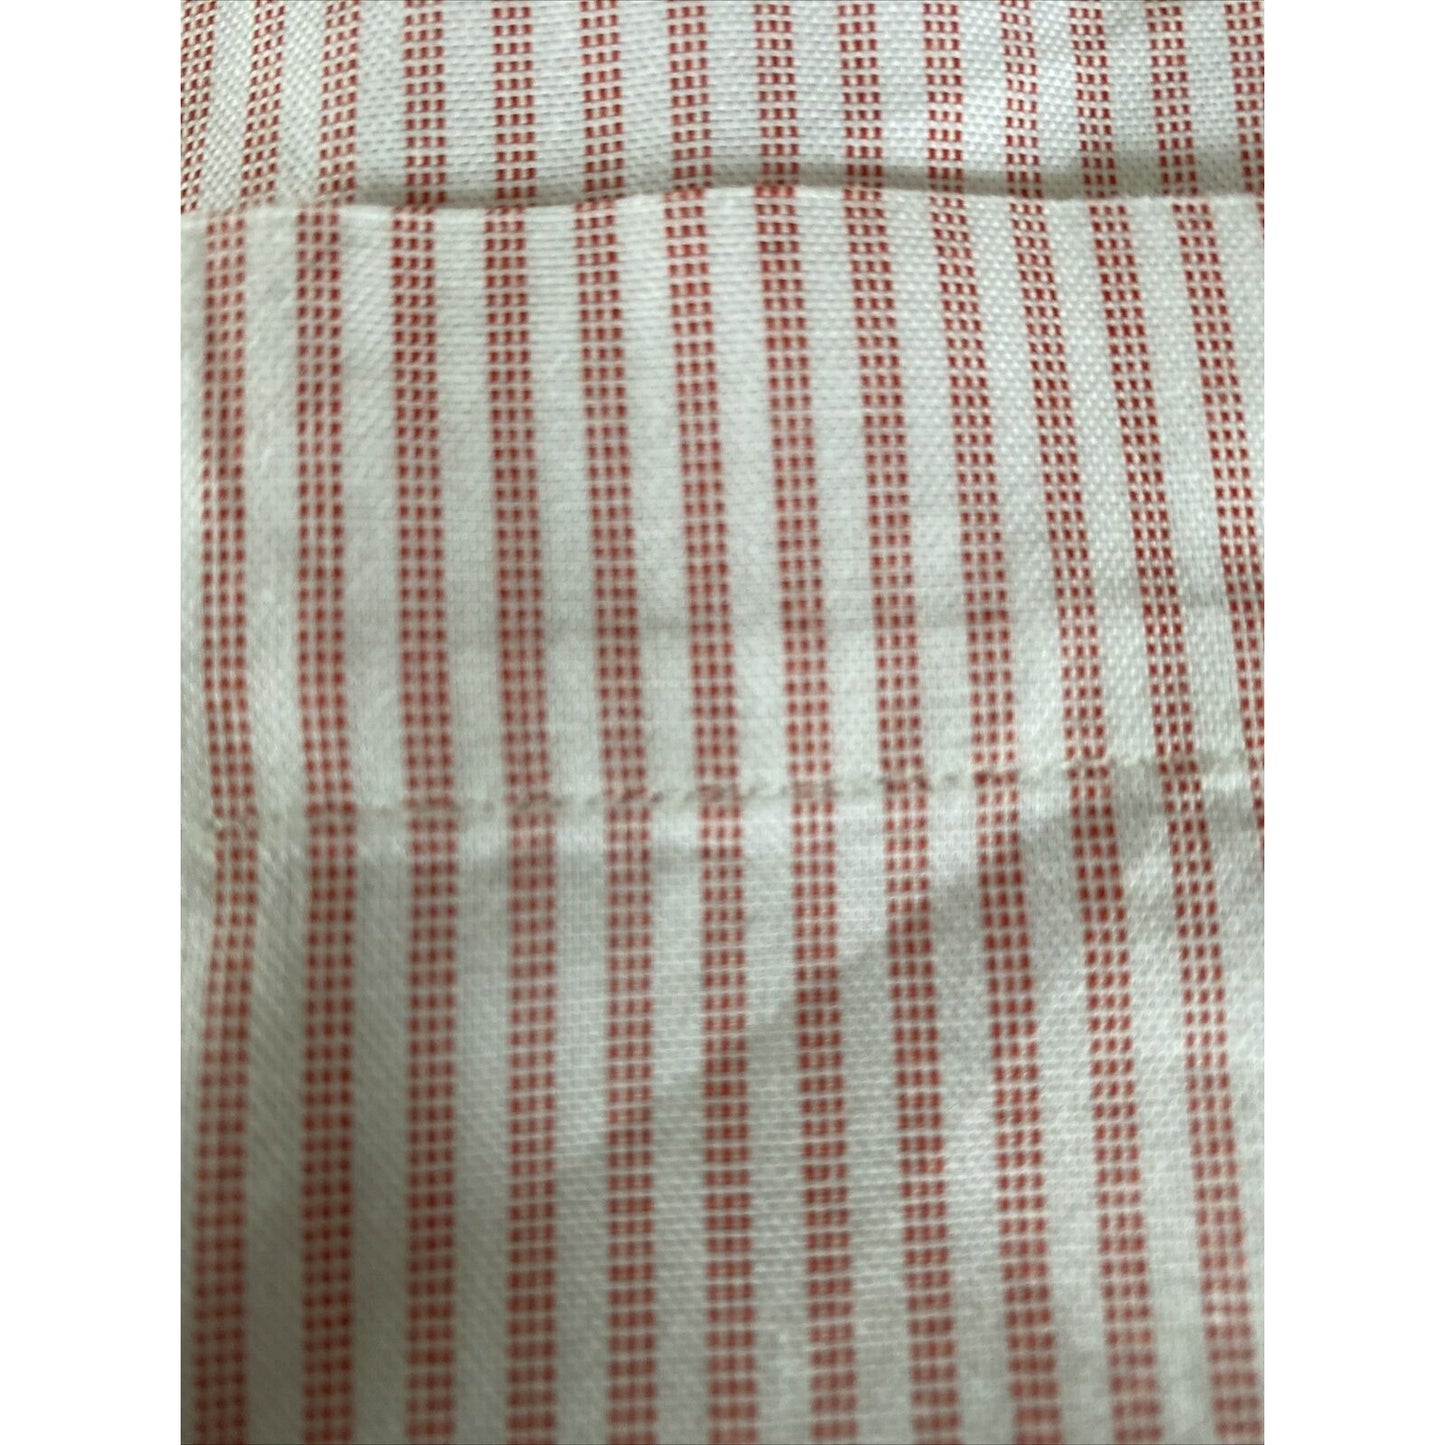 Nautica Men’s Size 16.5 (34/35) Active Fit Pink White Stripes Button-down Shirt